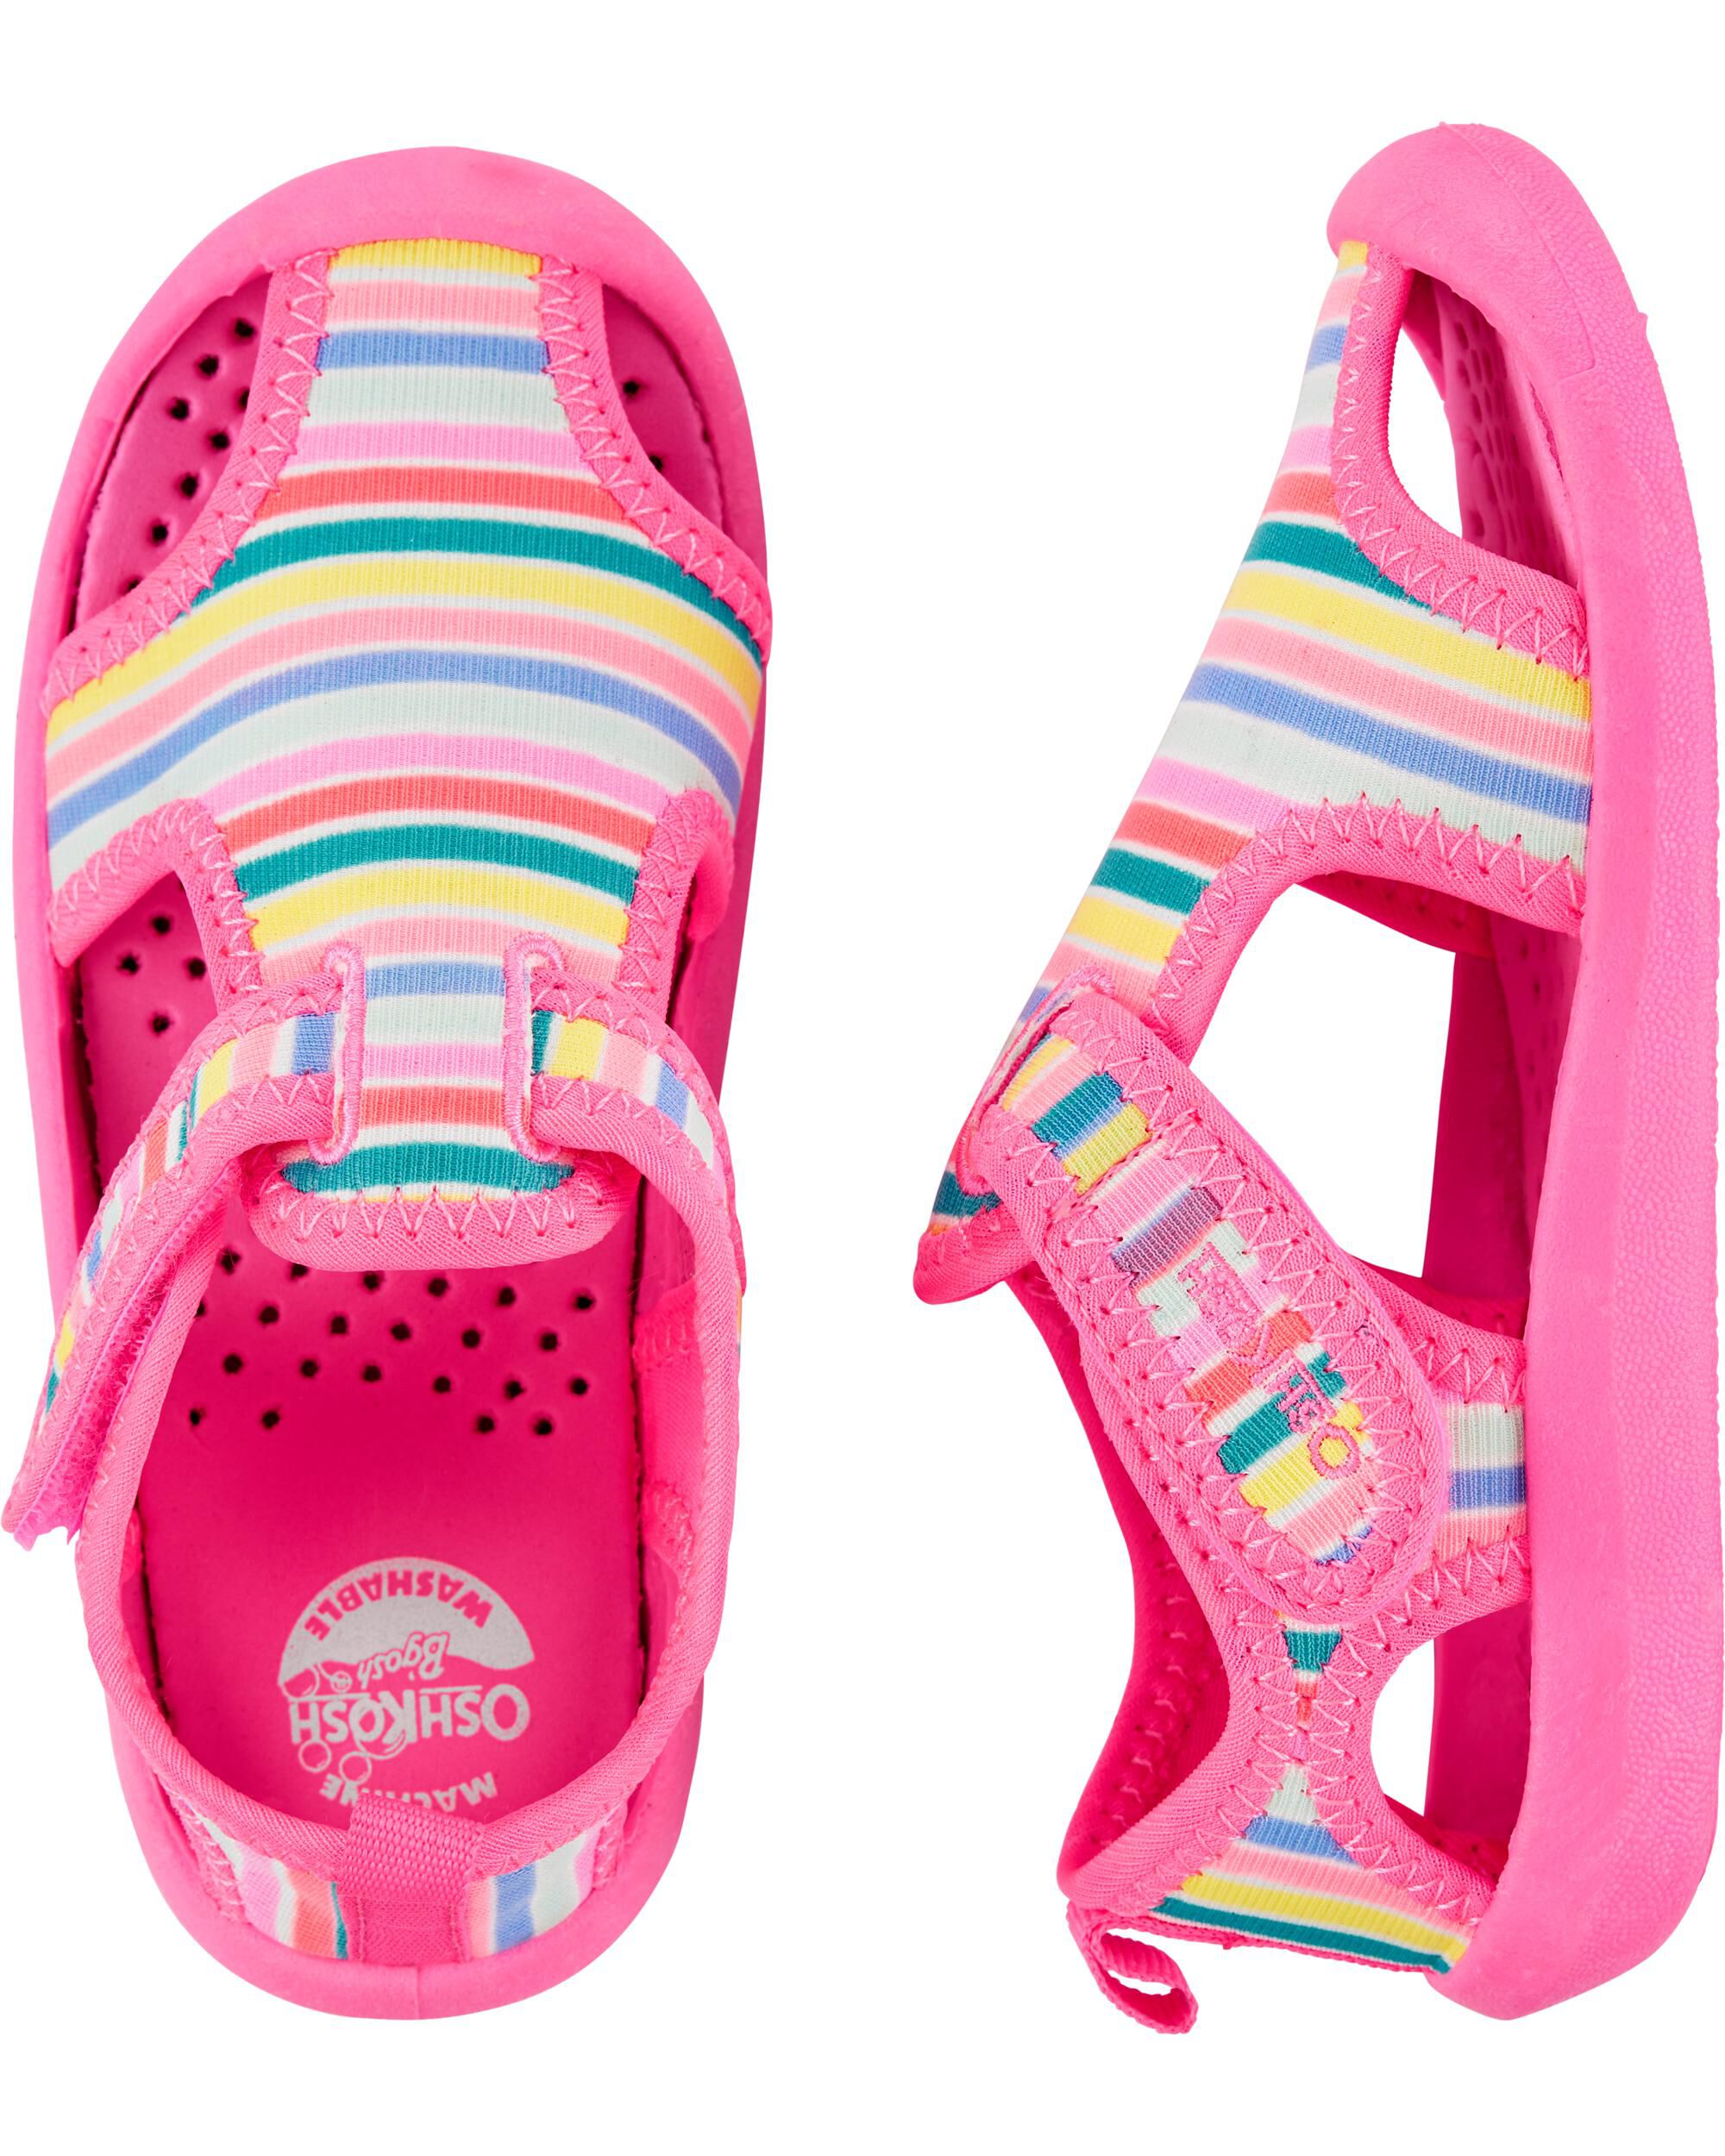 OshKosh Rainbow Water Shoes | carters.com